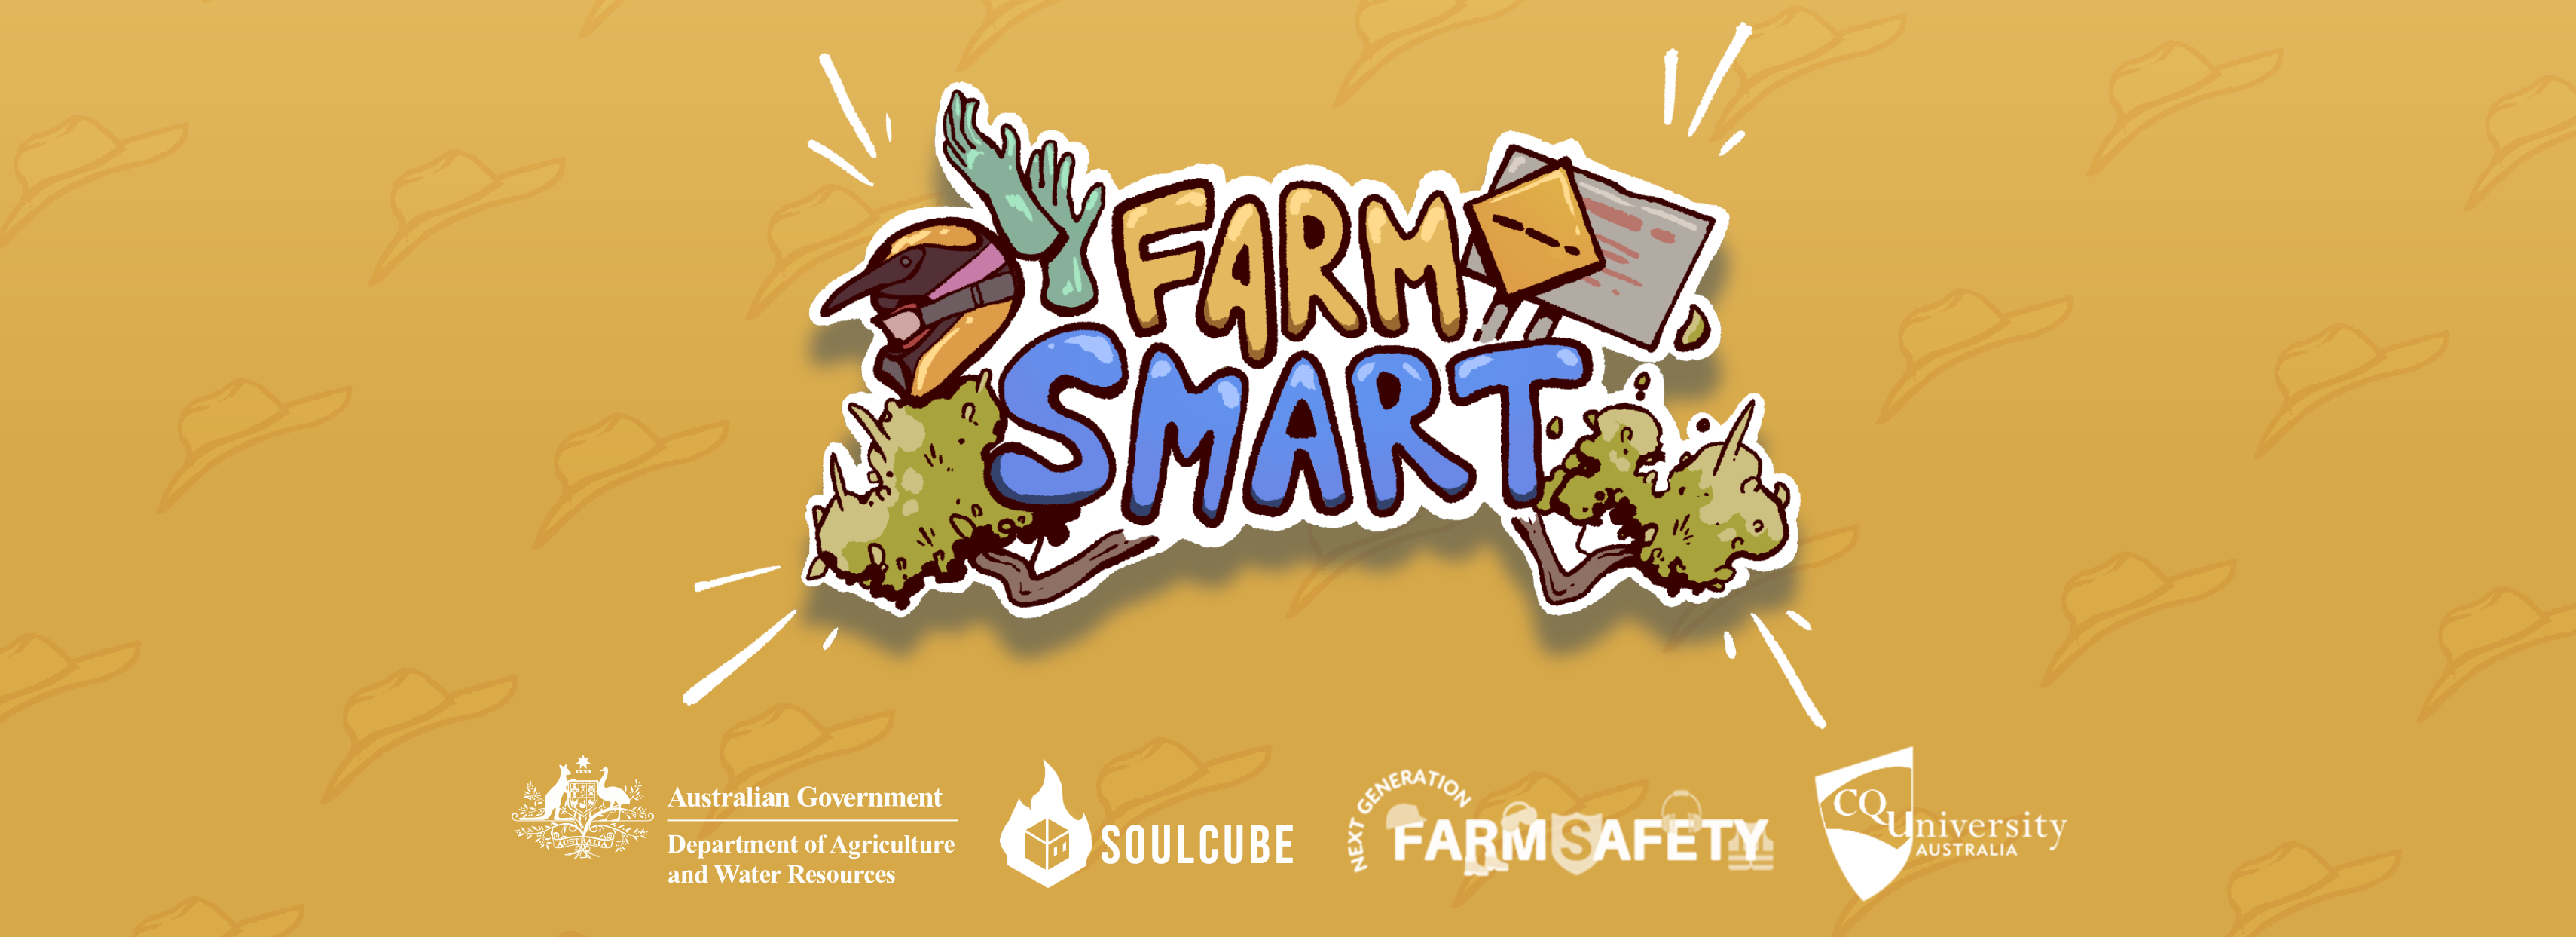 Farm Smart